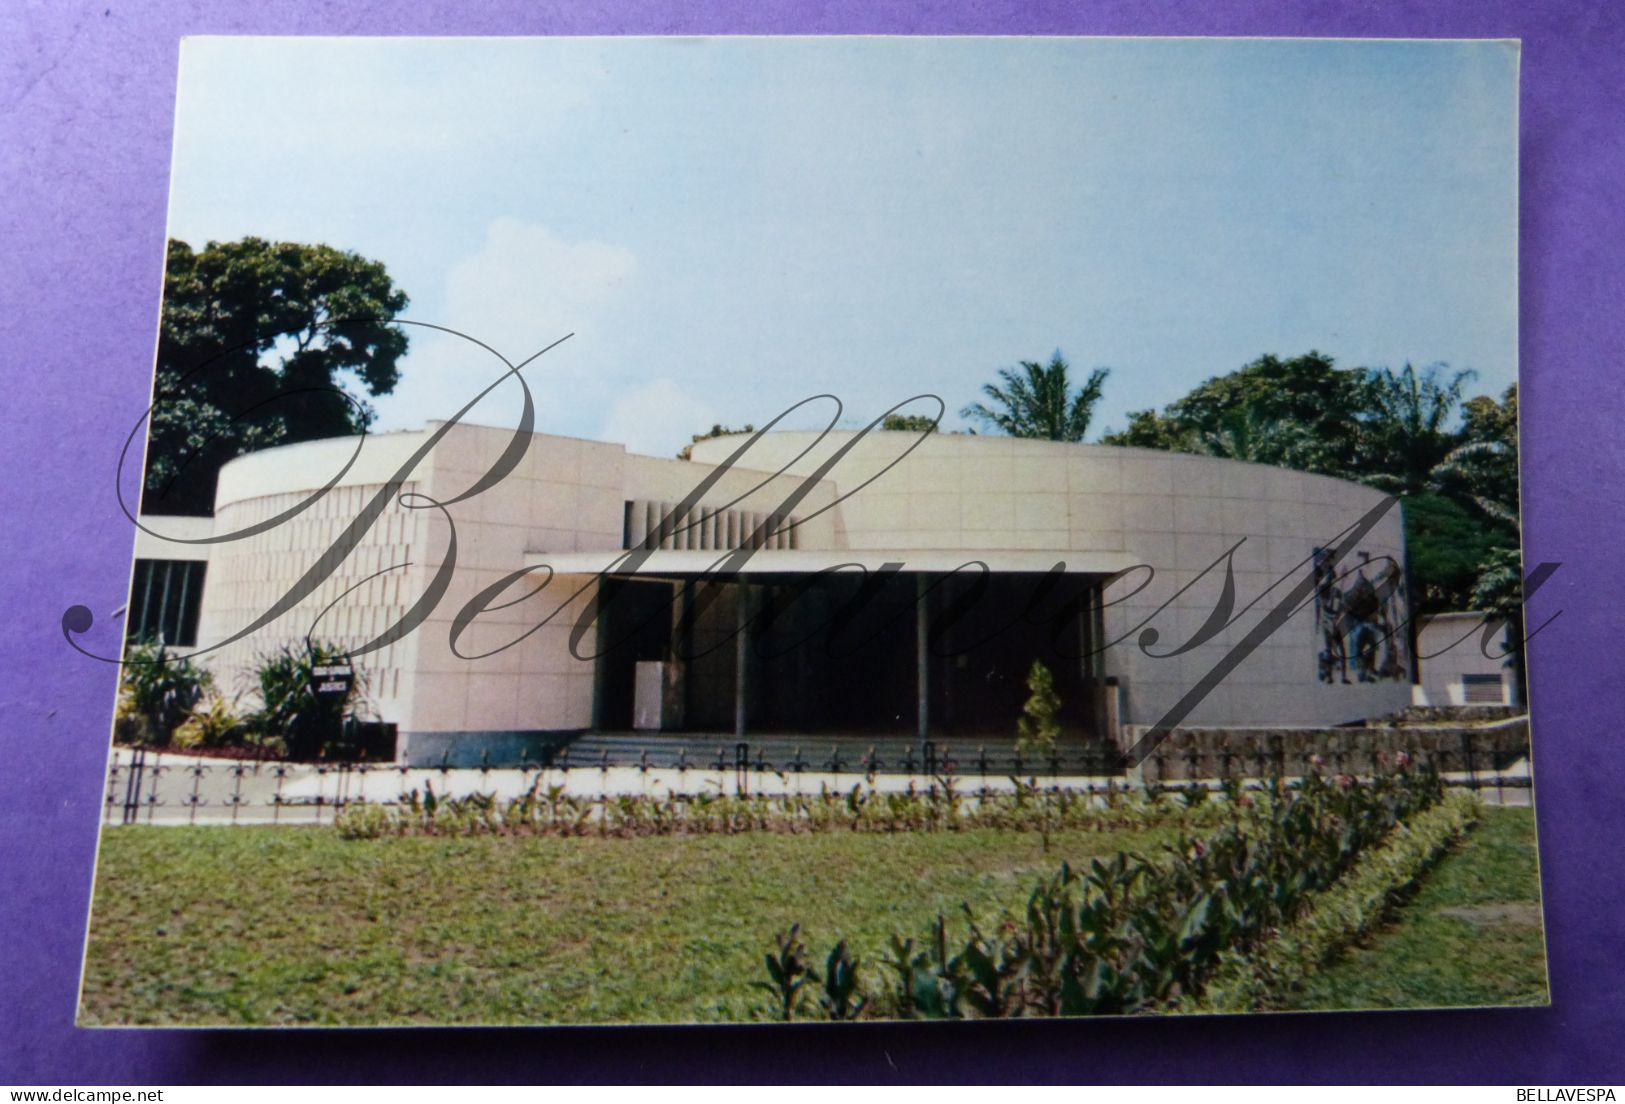 Congo Zaire Republic Palais Justice Kinshasa Neo-National Architecture - Kinshasa - Leopoldville